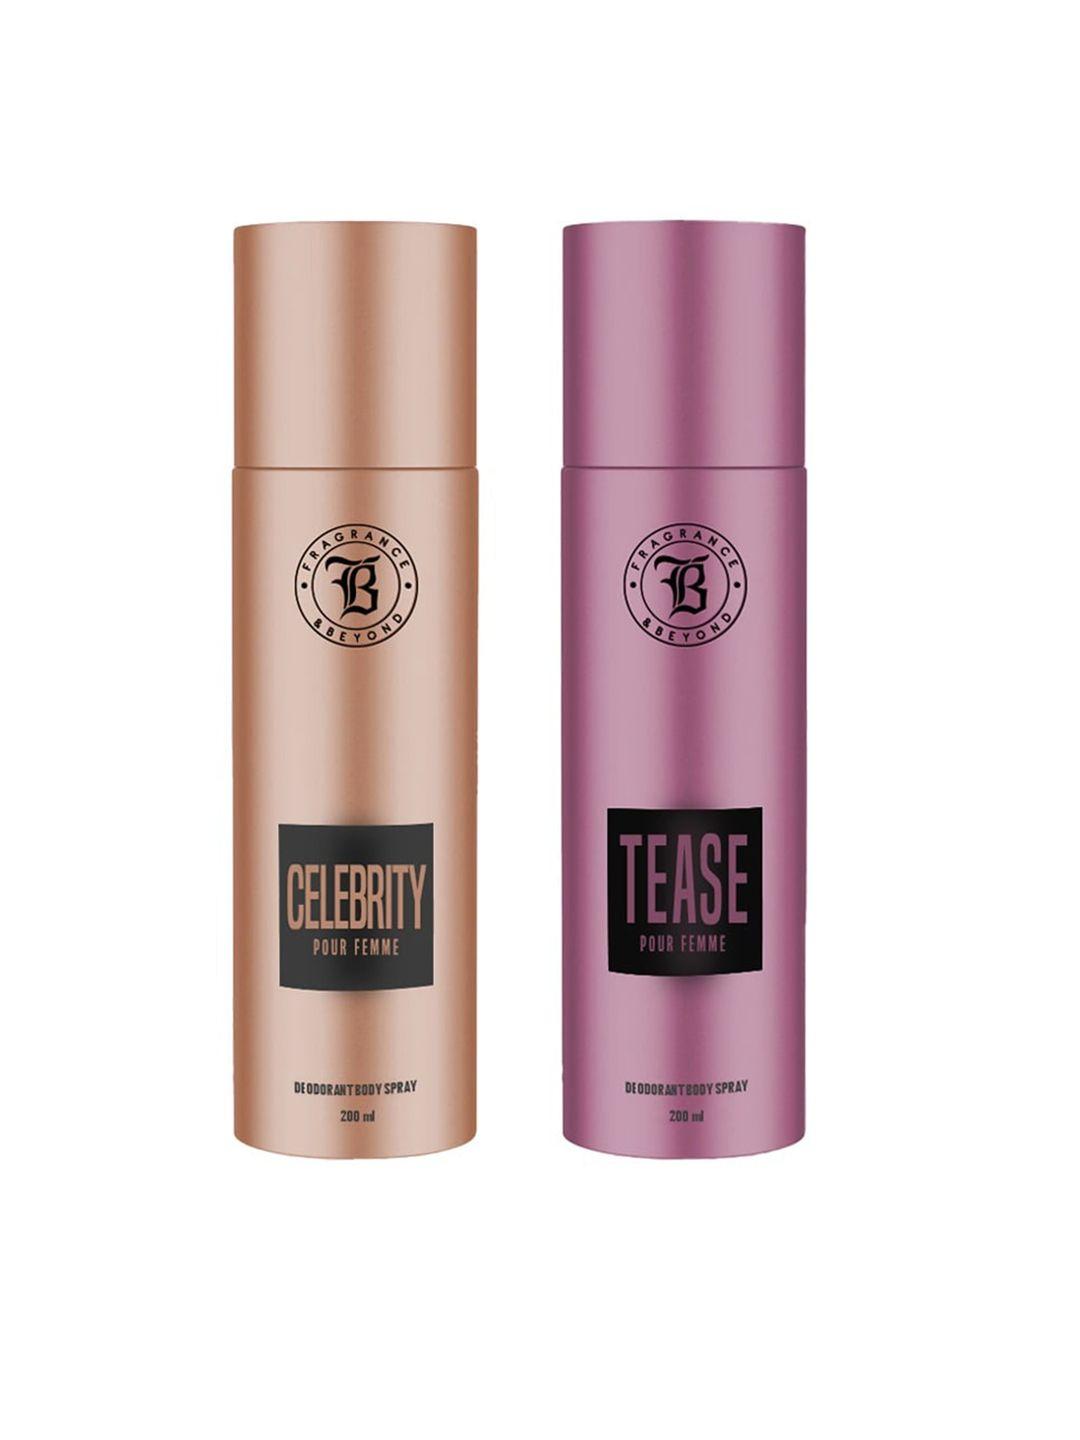 fragrance & beyond women set of celebrity & tease deodorant body sprays - 200 ml each